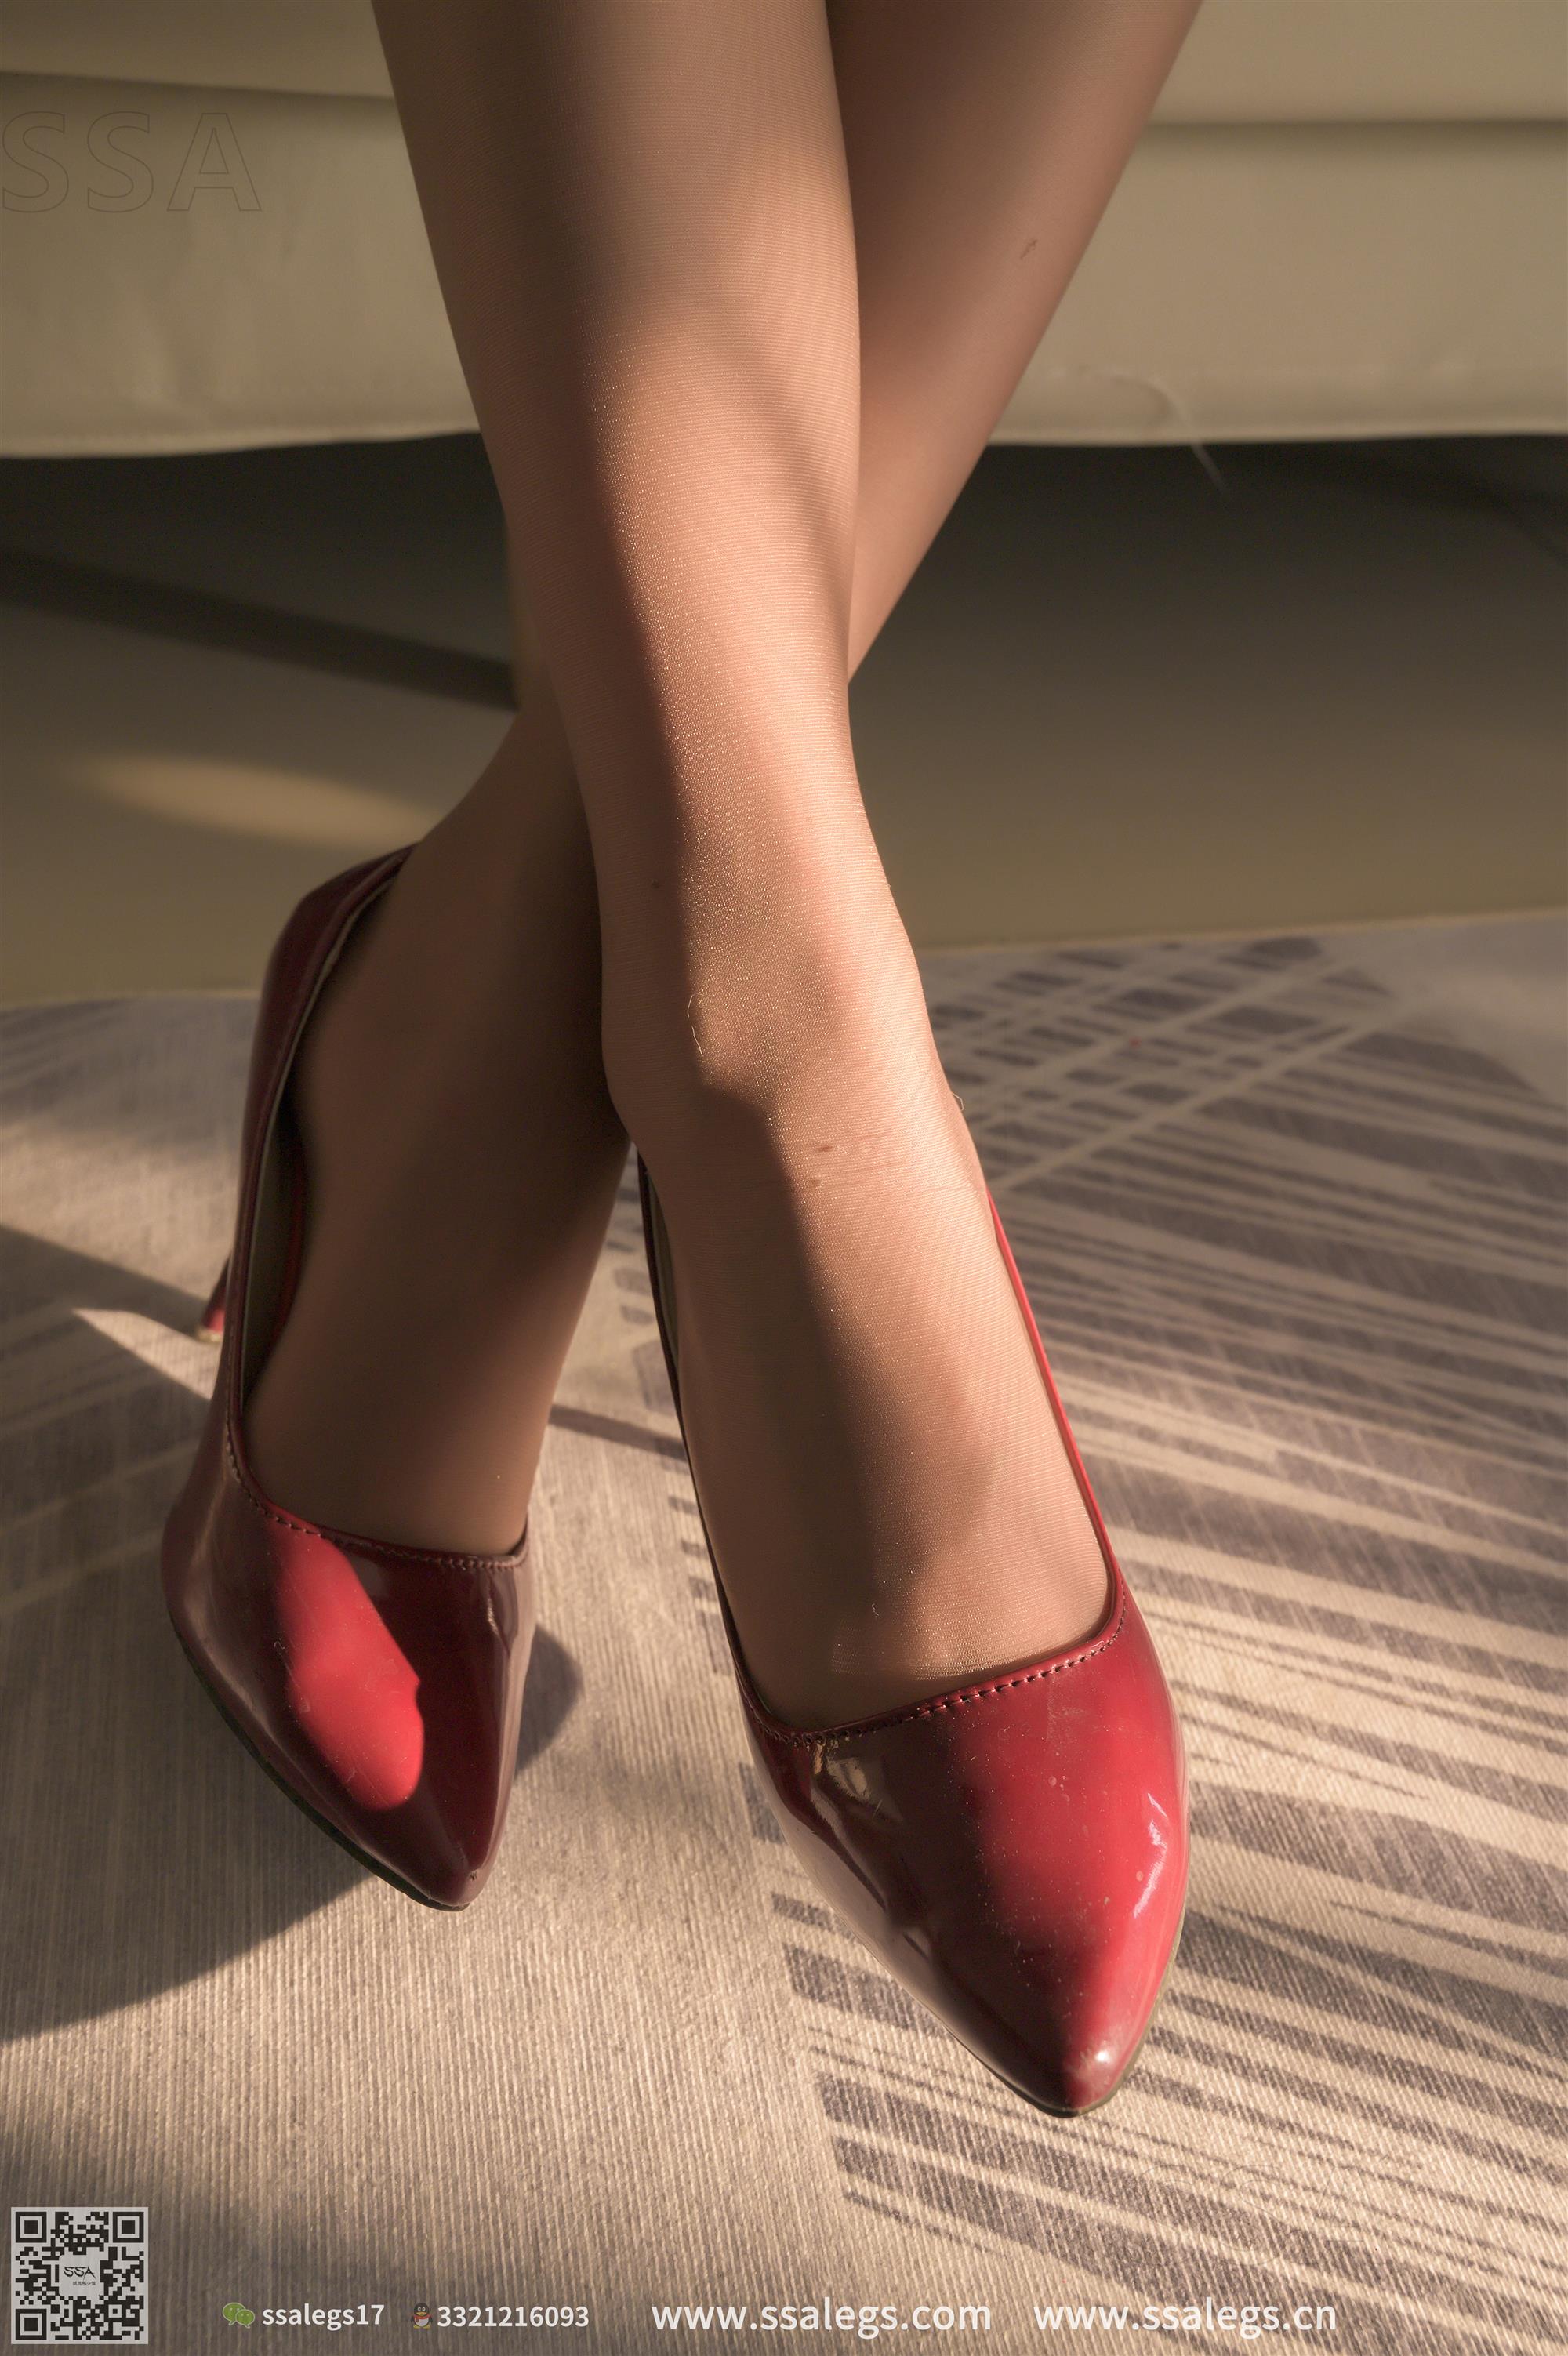 SSA 丝社 No.312 娜娜御姐的红色高跟鞋咖啡丝美腿 - 5.jpg